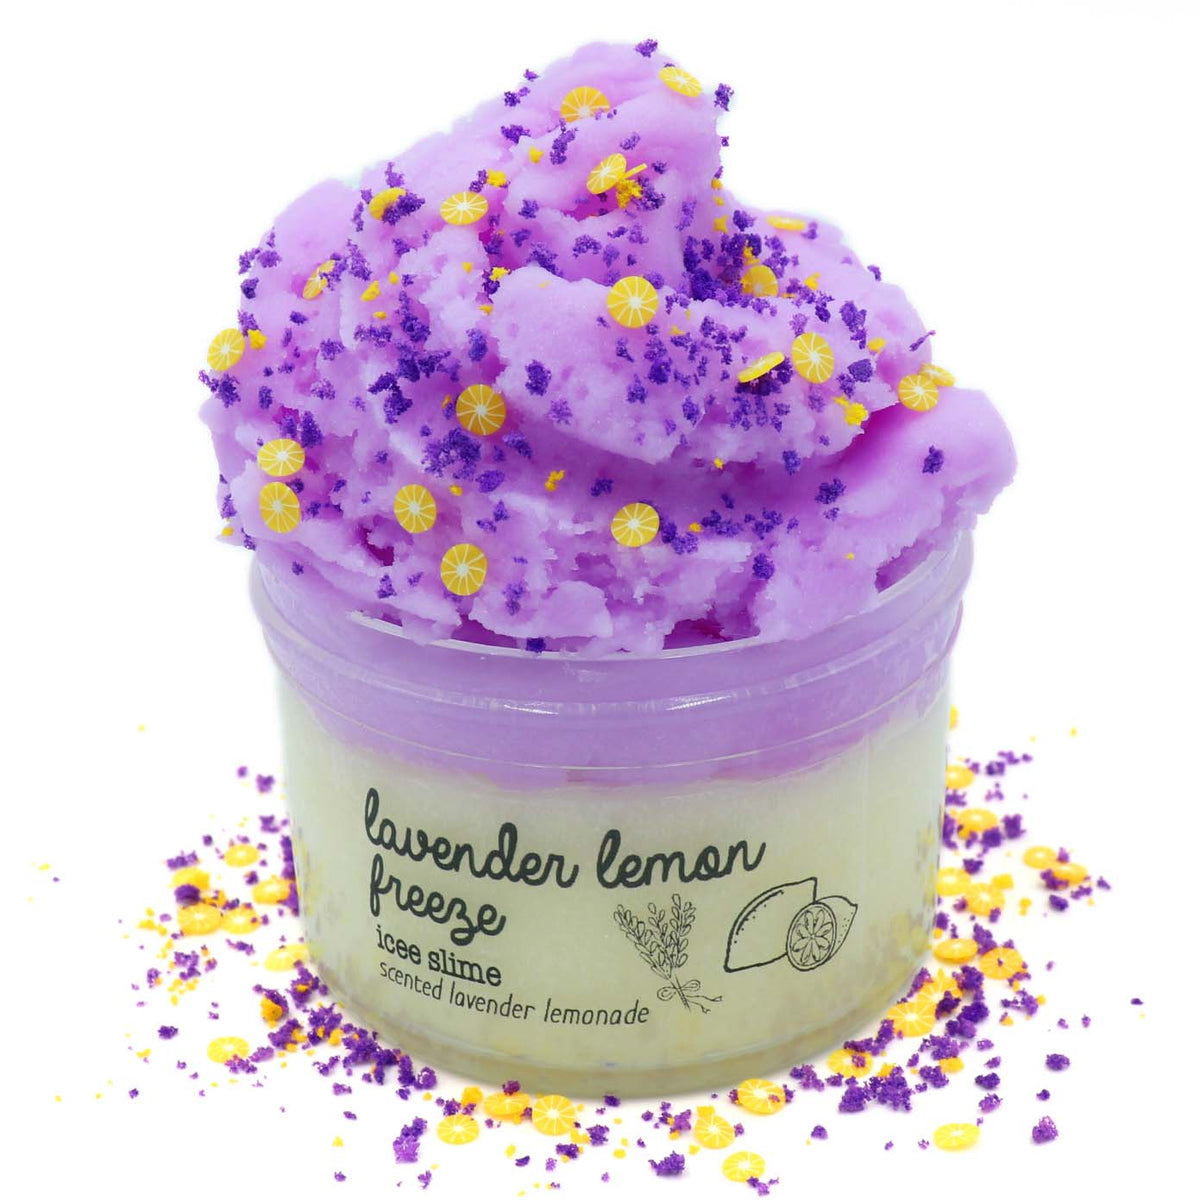 Lavender Lemon Freeze Purple Yellow Refreshing Calming Summer Sprinkles Icee Slime Fantasies Shop 7oz Front View